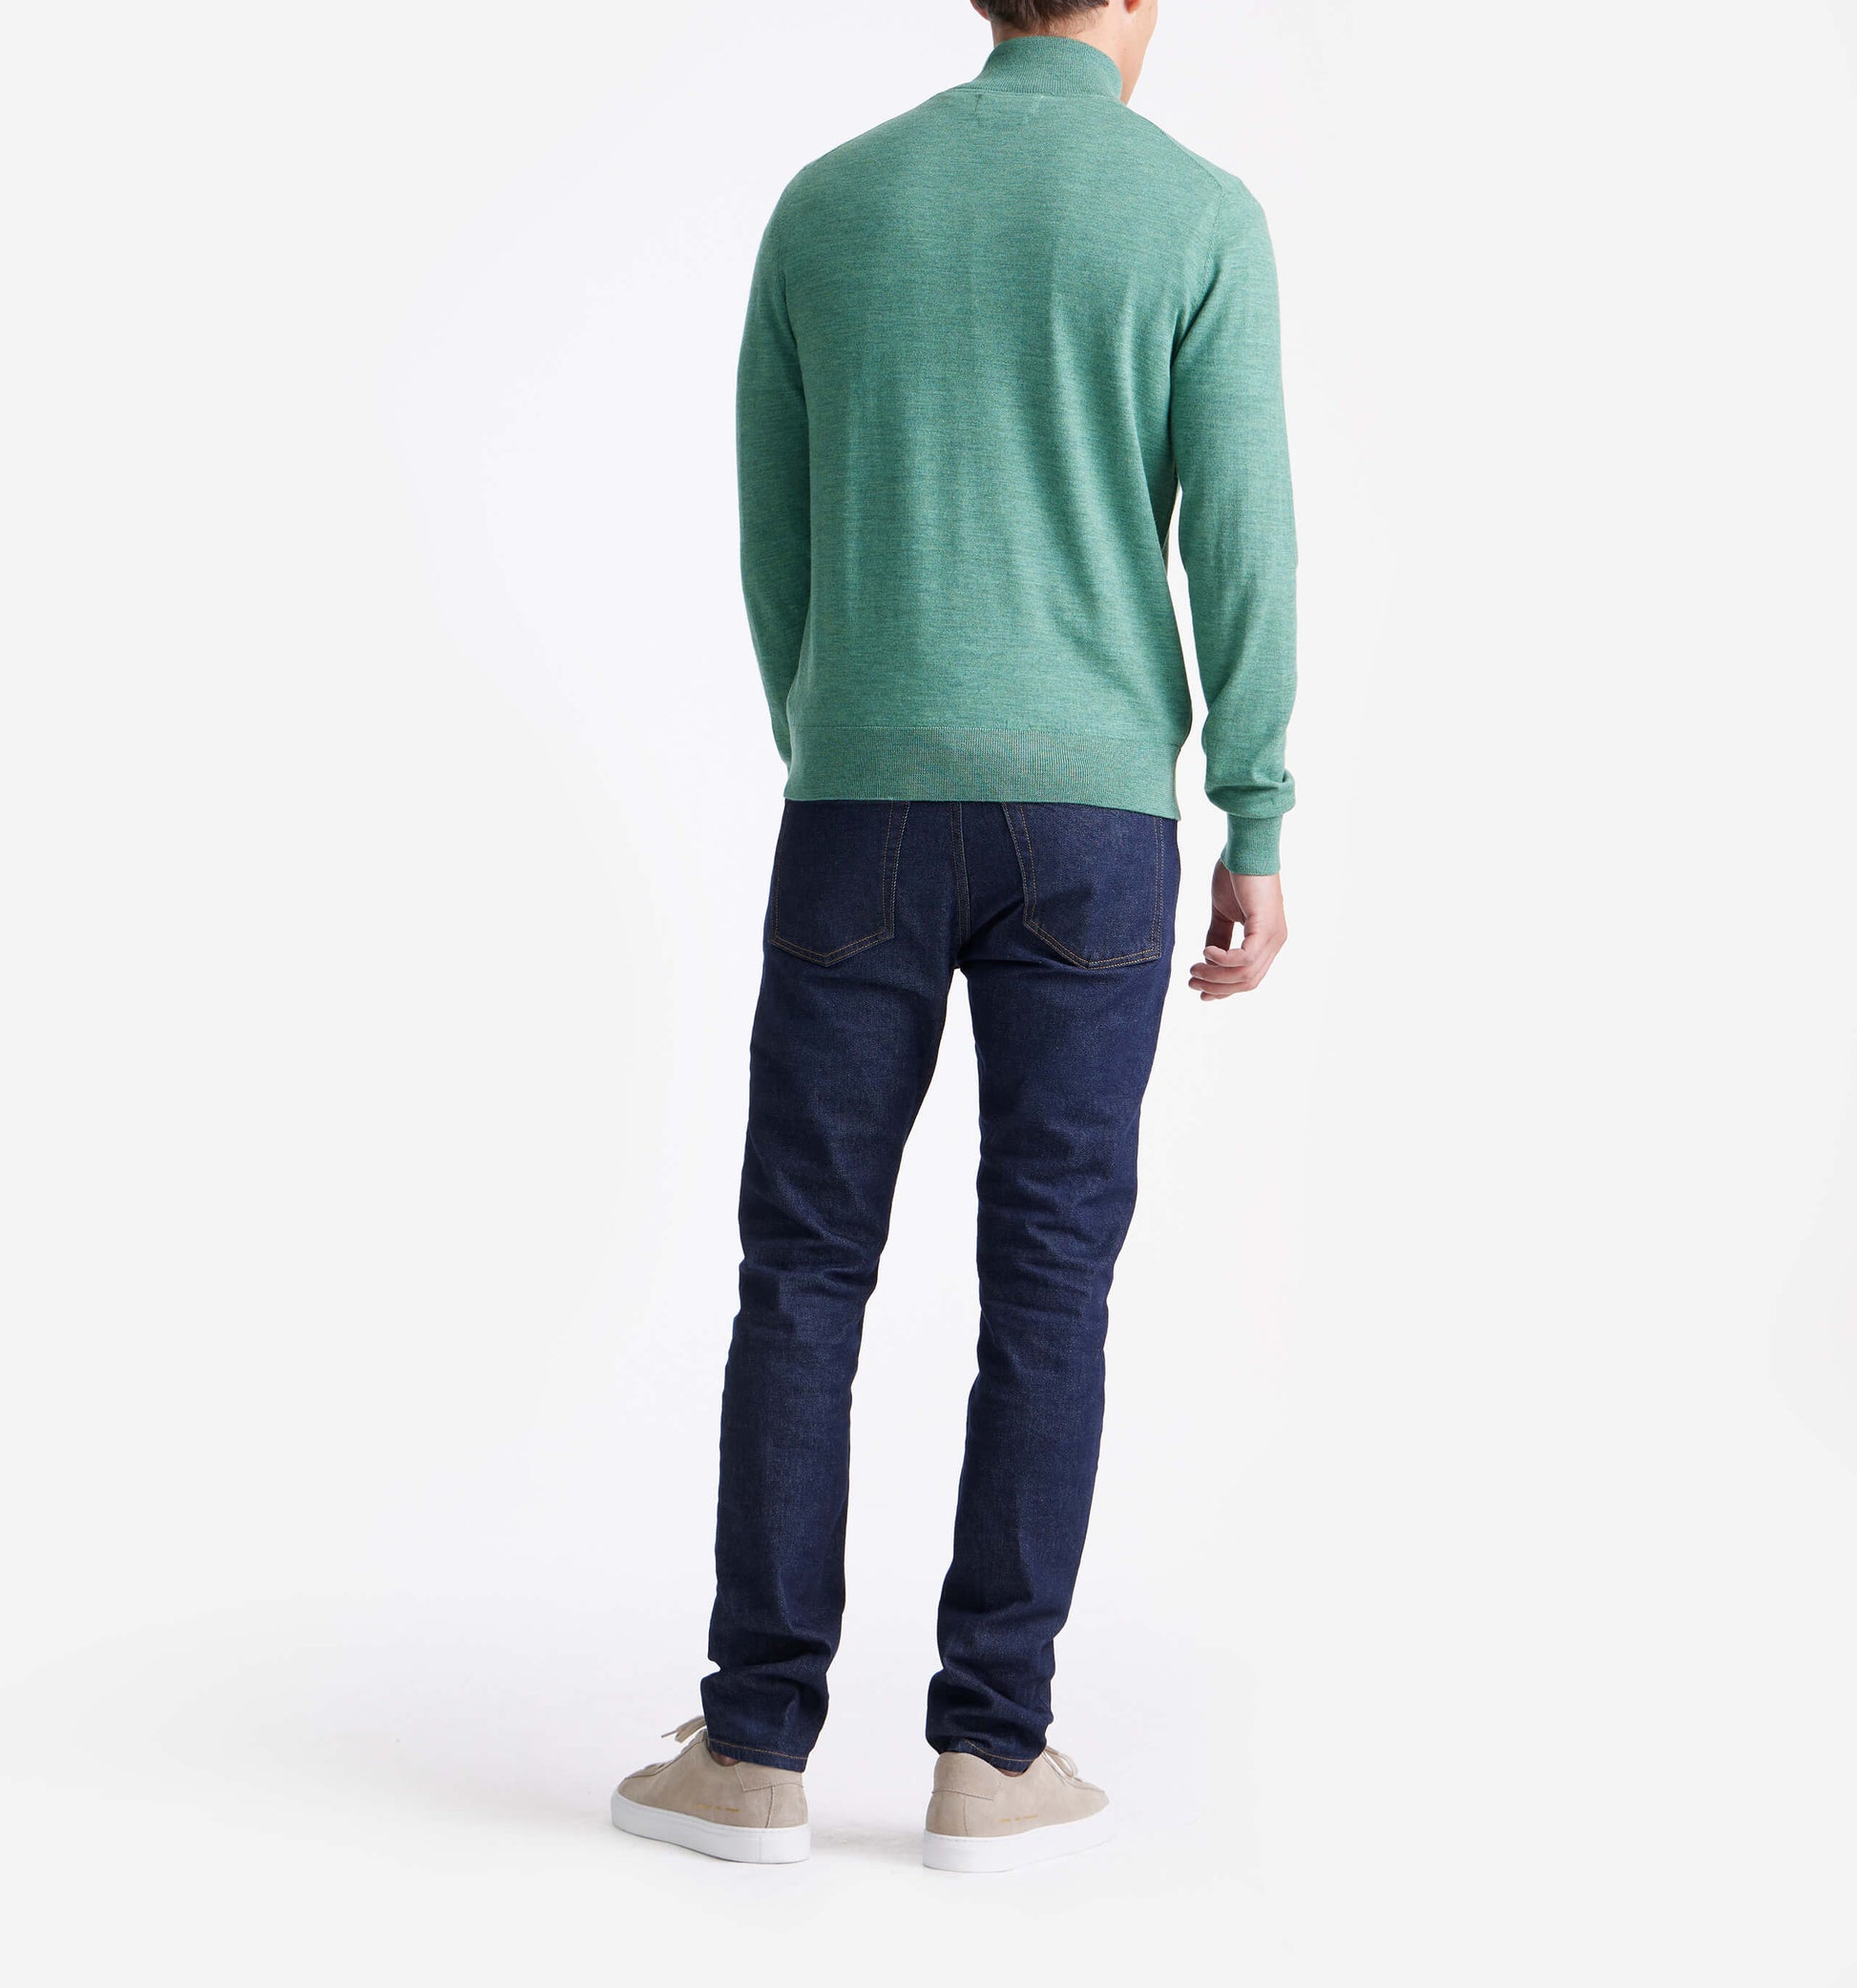 The Michael - Merino Wool Zip Mock In Green From King Essentials